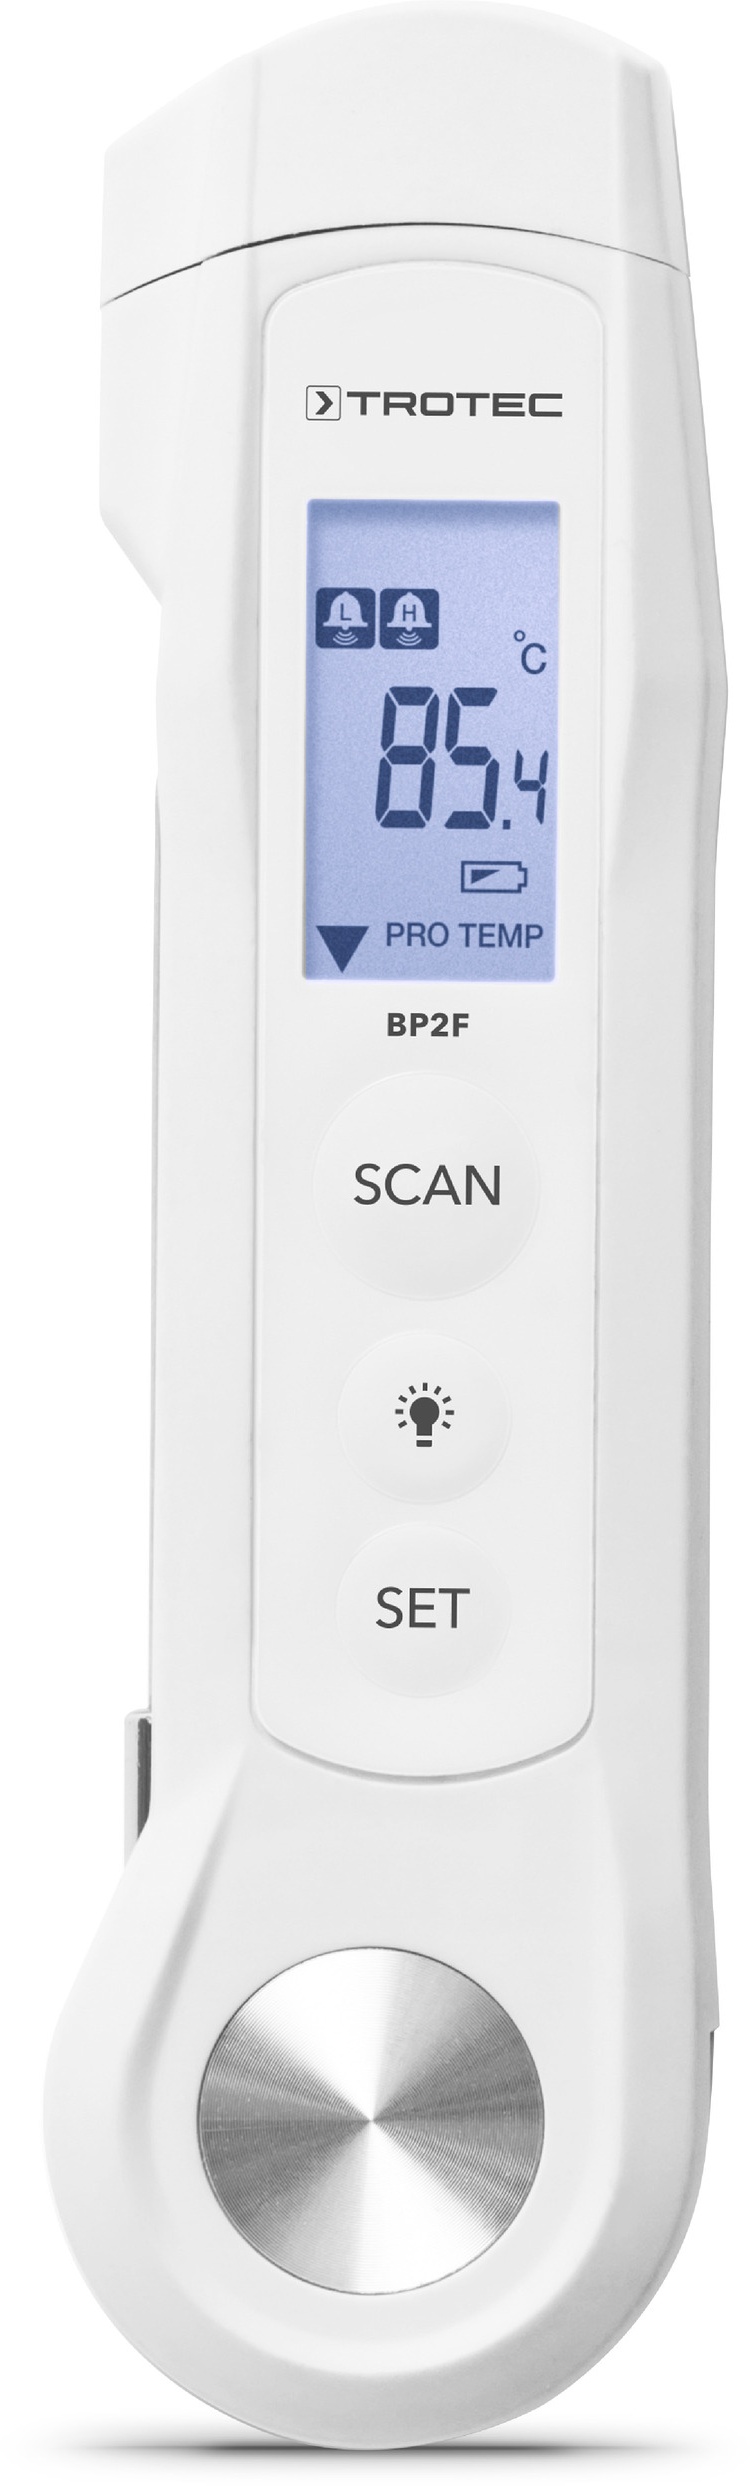 Trotec Thermomètre alimentaire BP2F